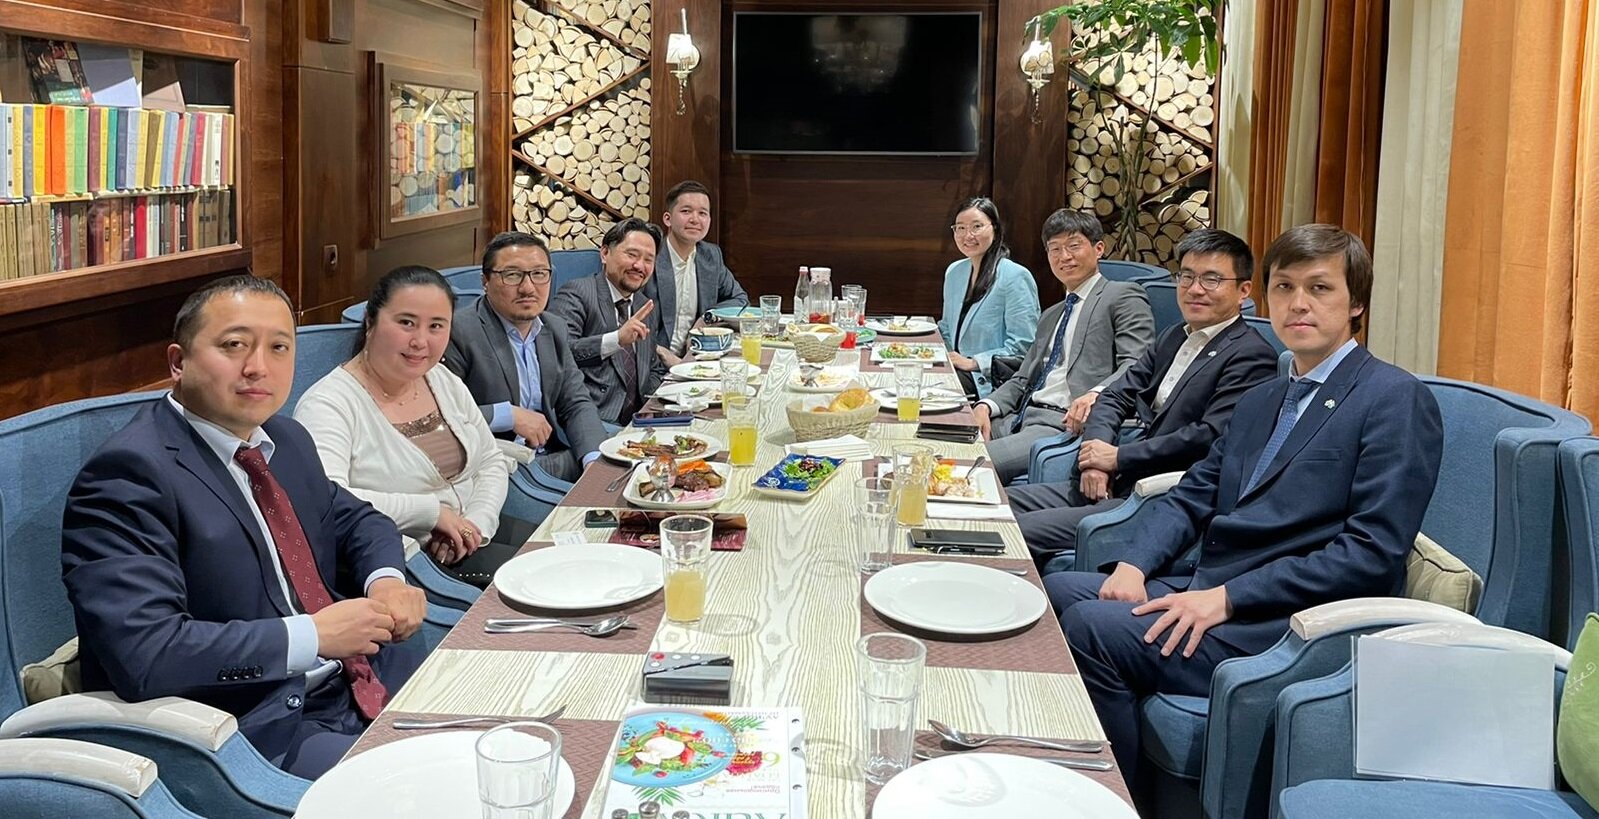 Kazakhstan Alumni Meets with the Korean Embassy (13 May 2022)